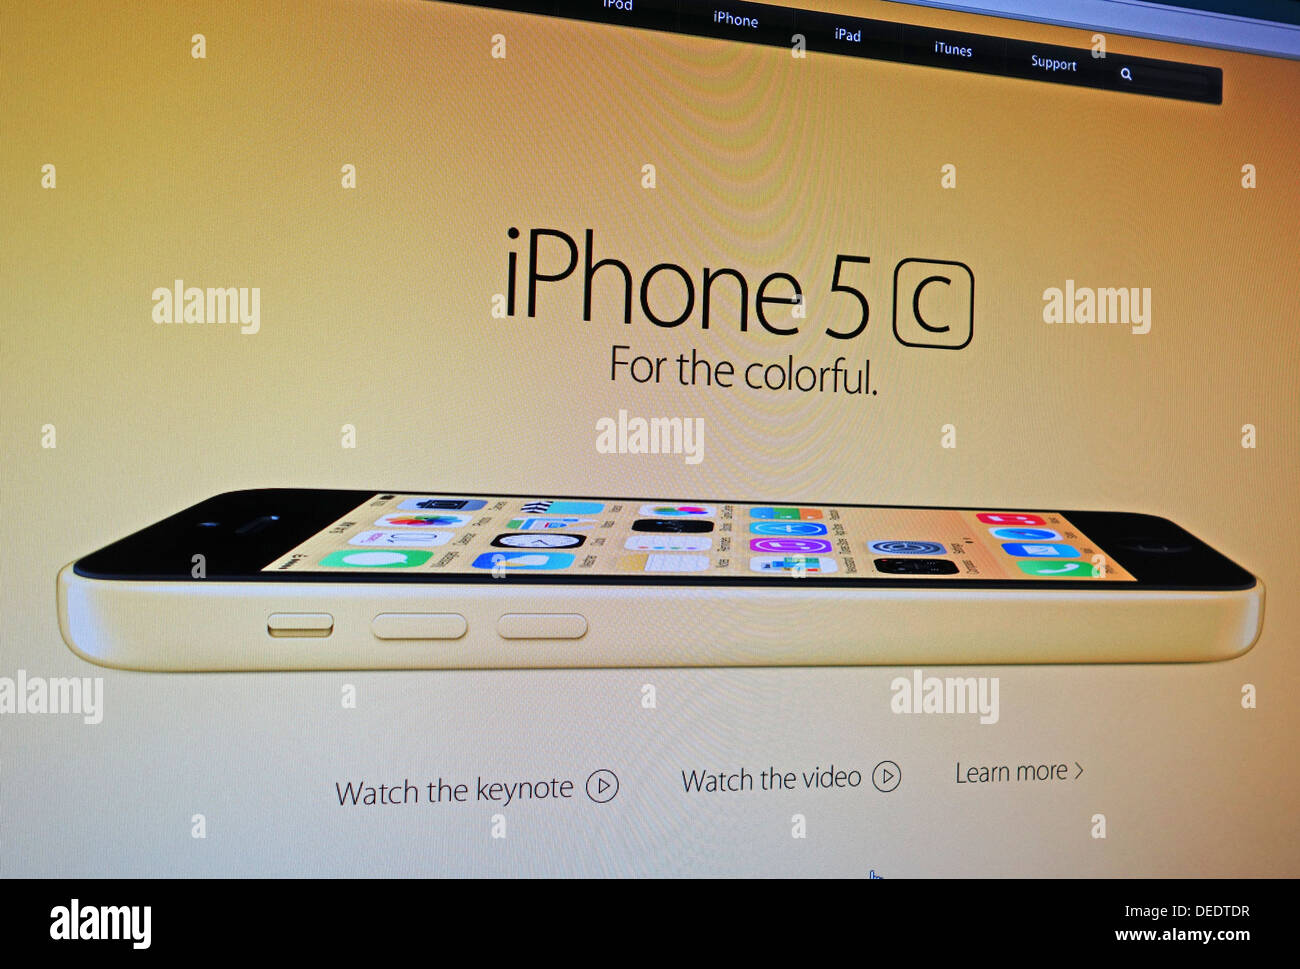 iPhone 5 c internet advert Stock Photo